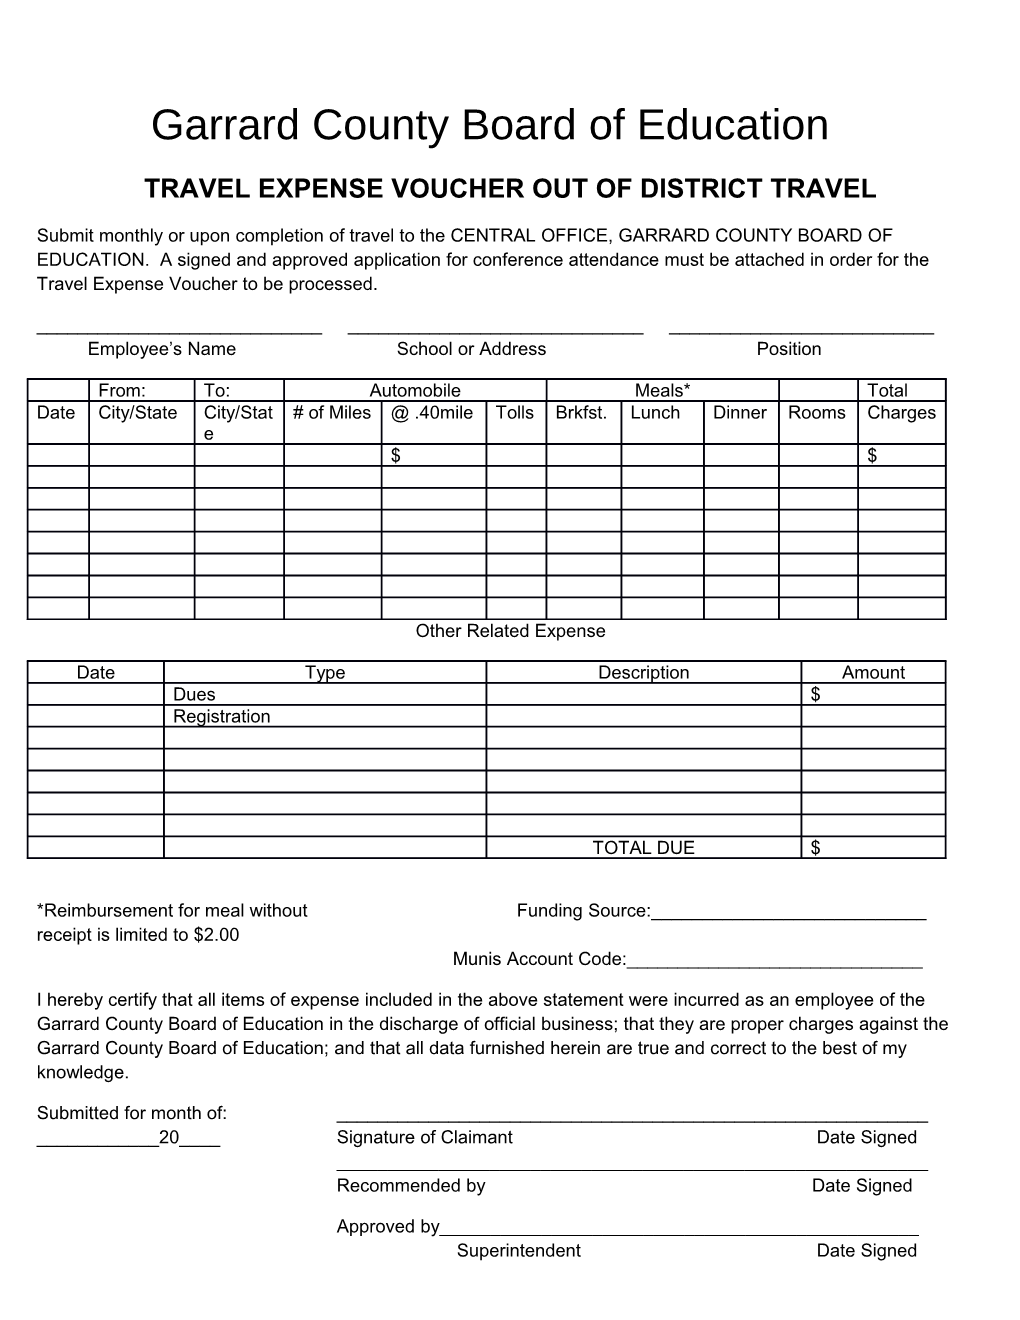 Travel Expense Voucherout of District Travel